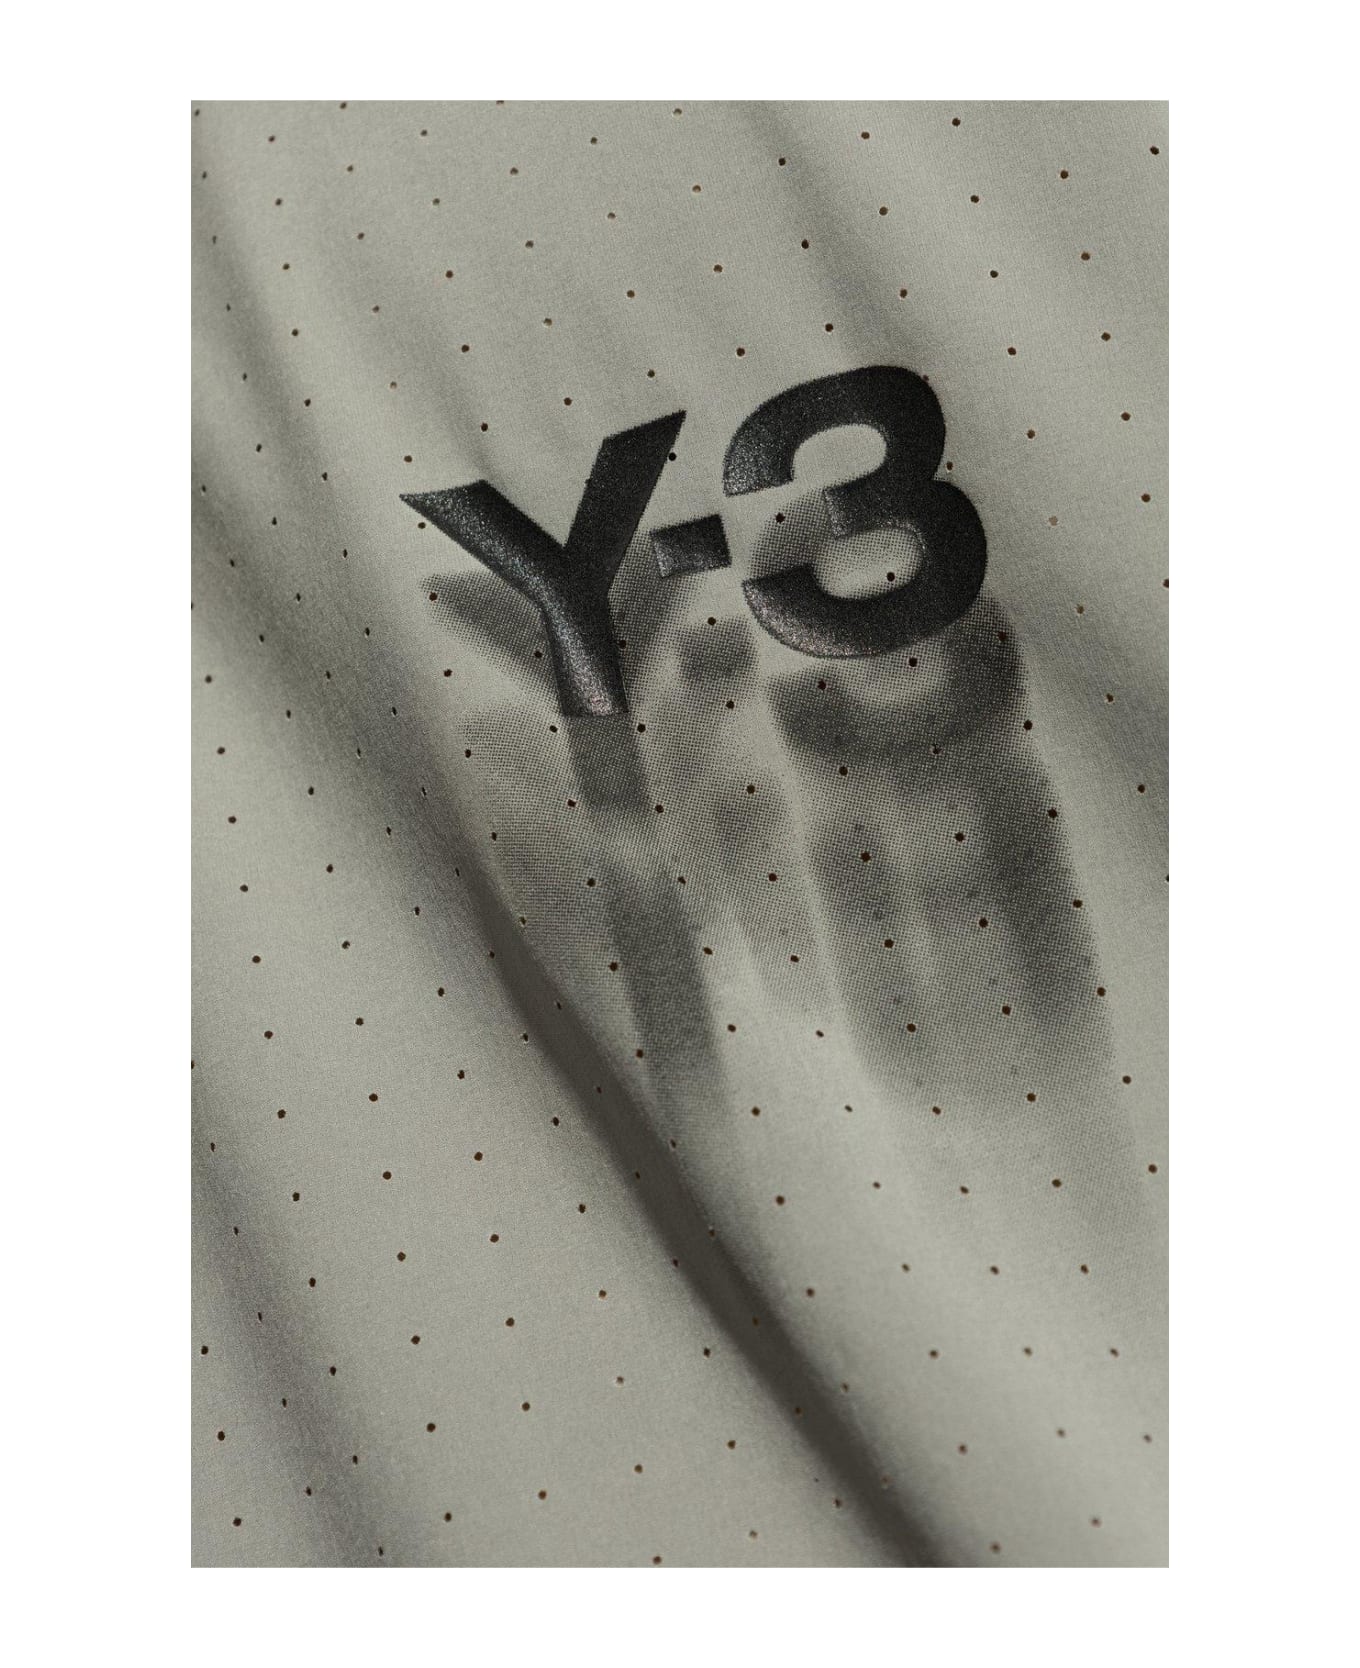 Y-3 Logo Printed Perforated T-shirt